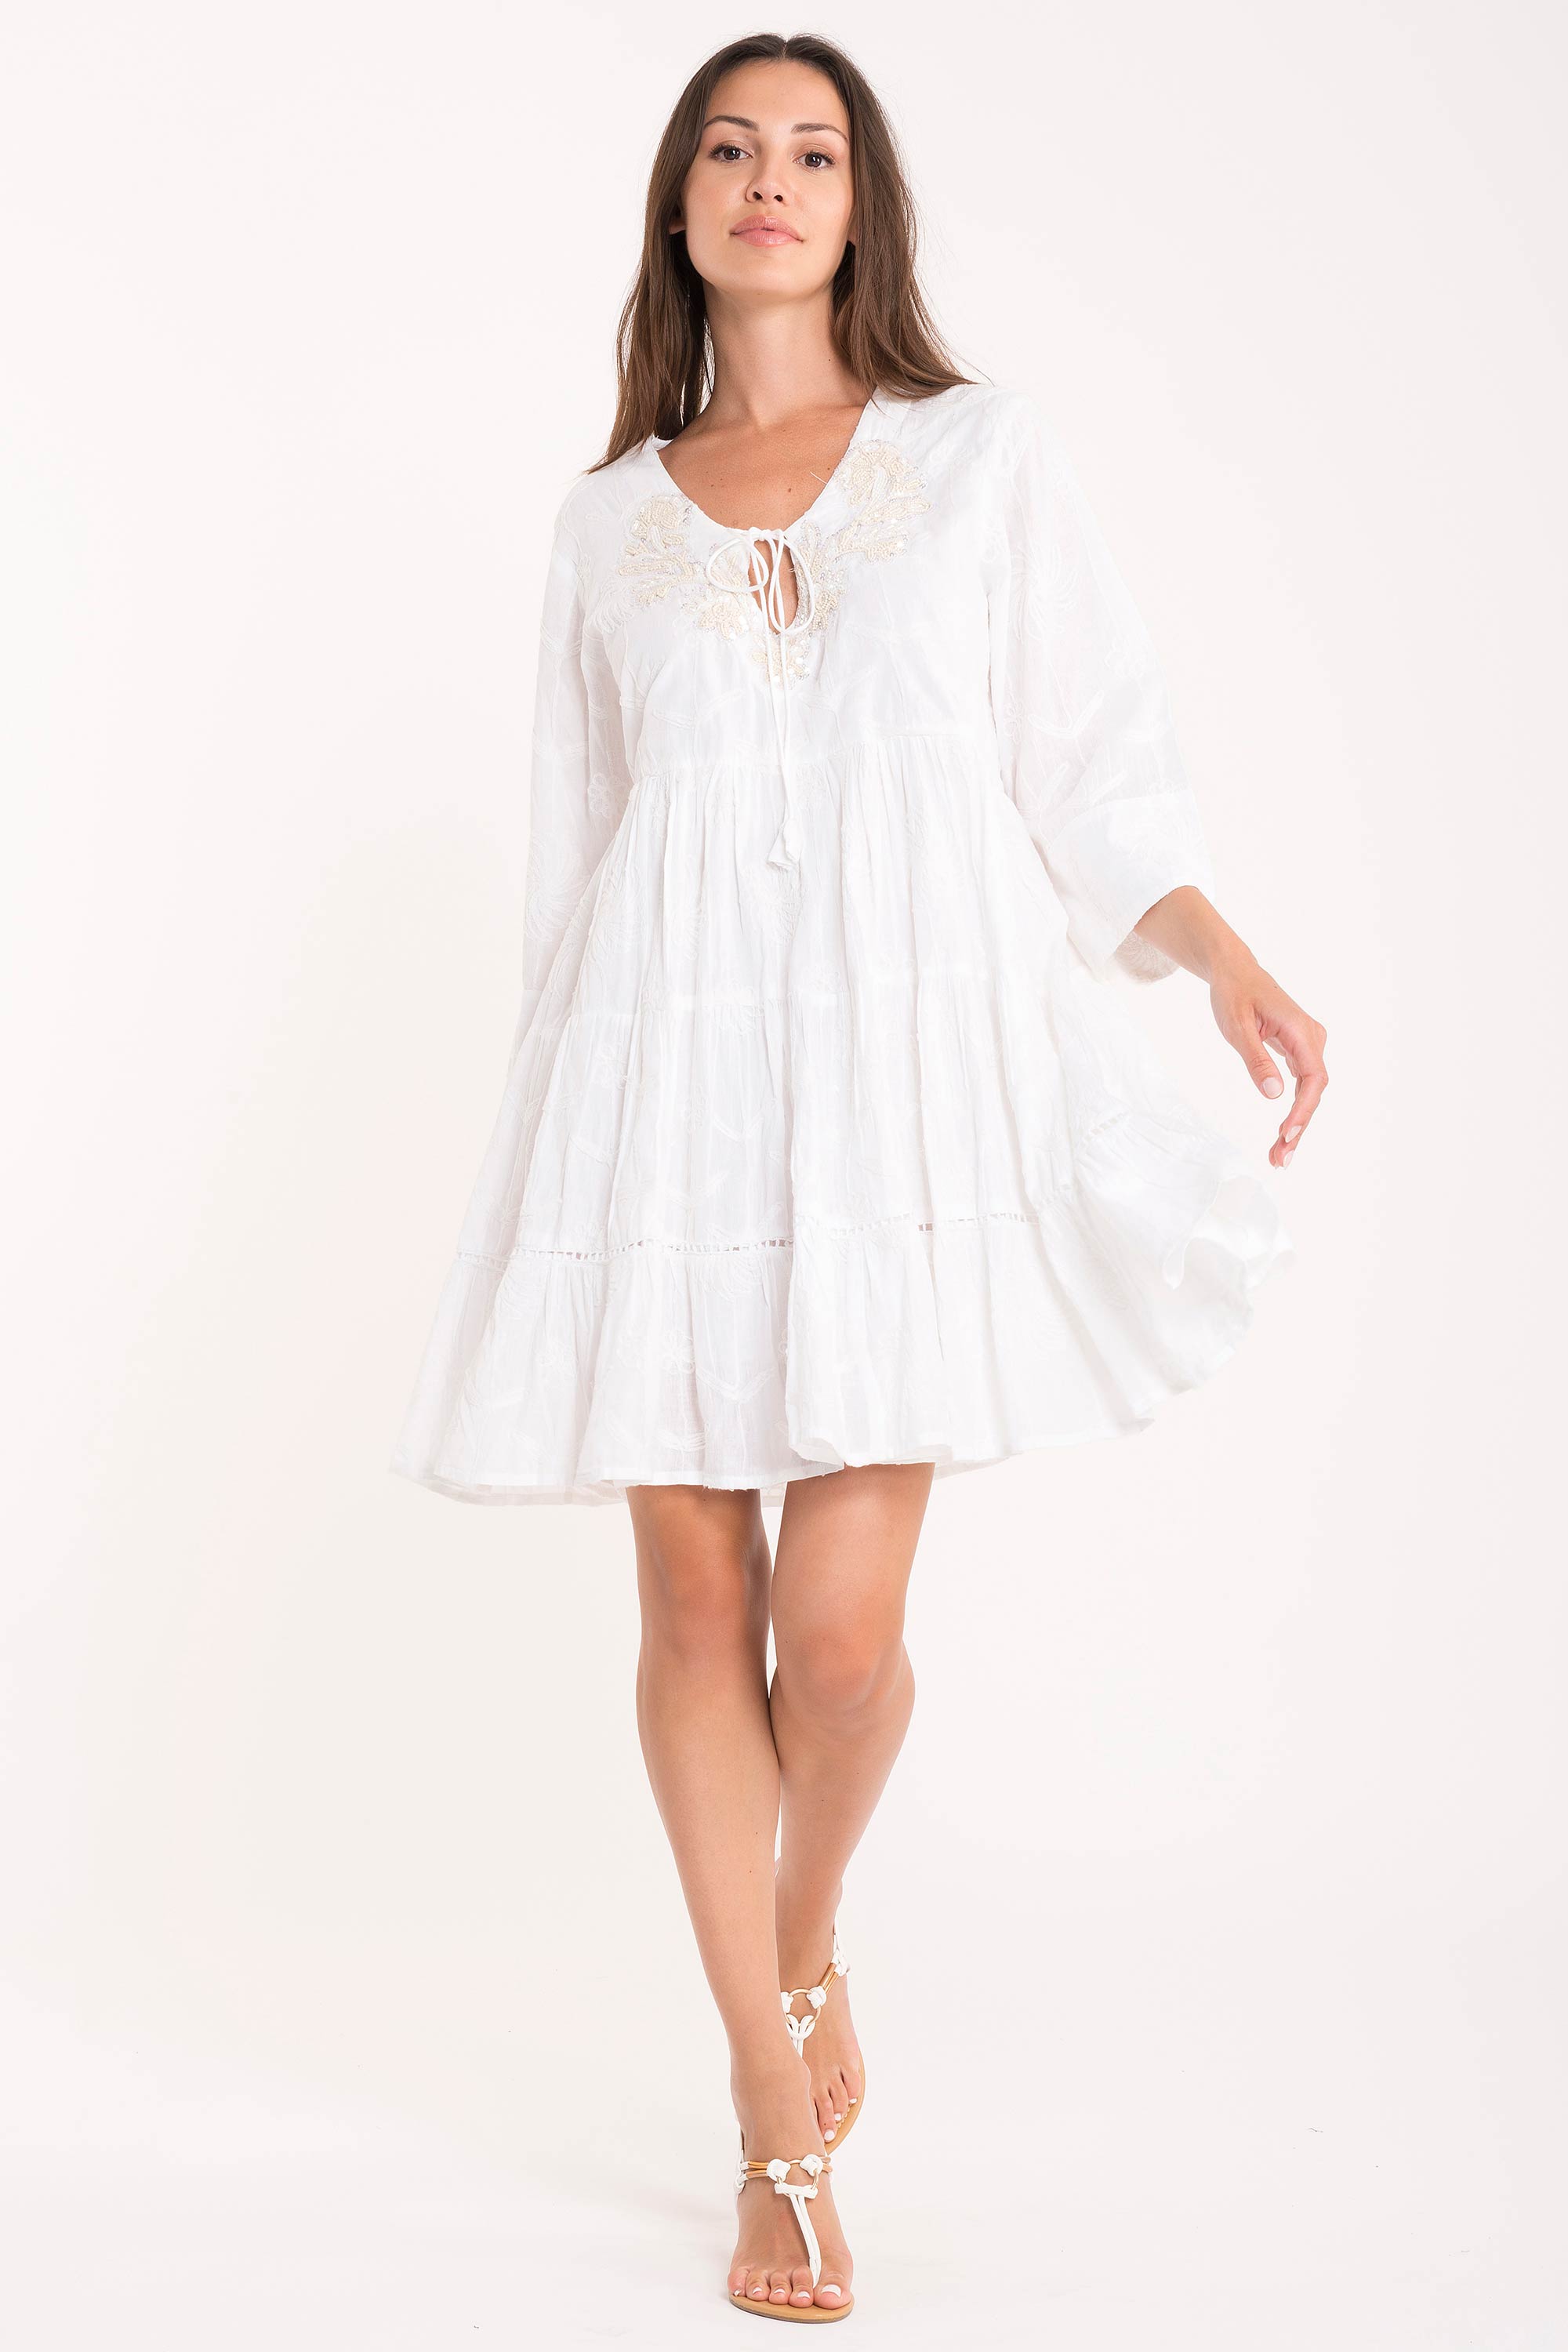 Capri 3/4 sleeve dress